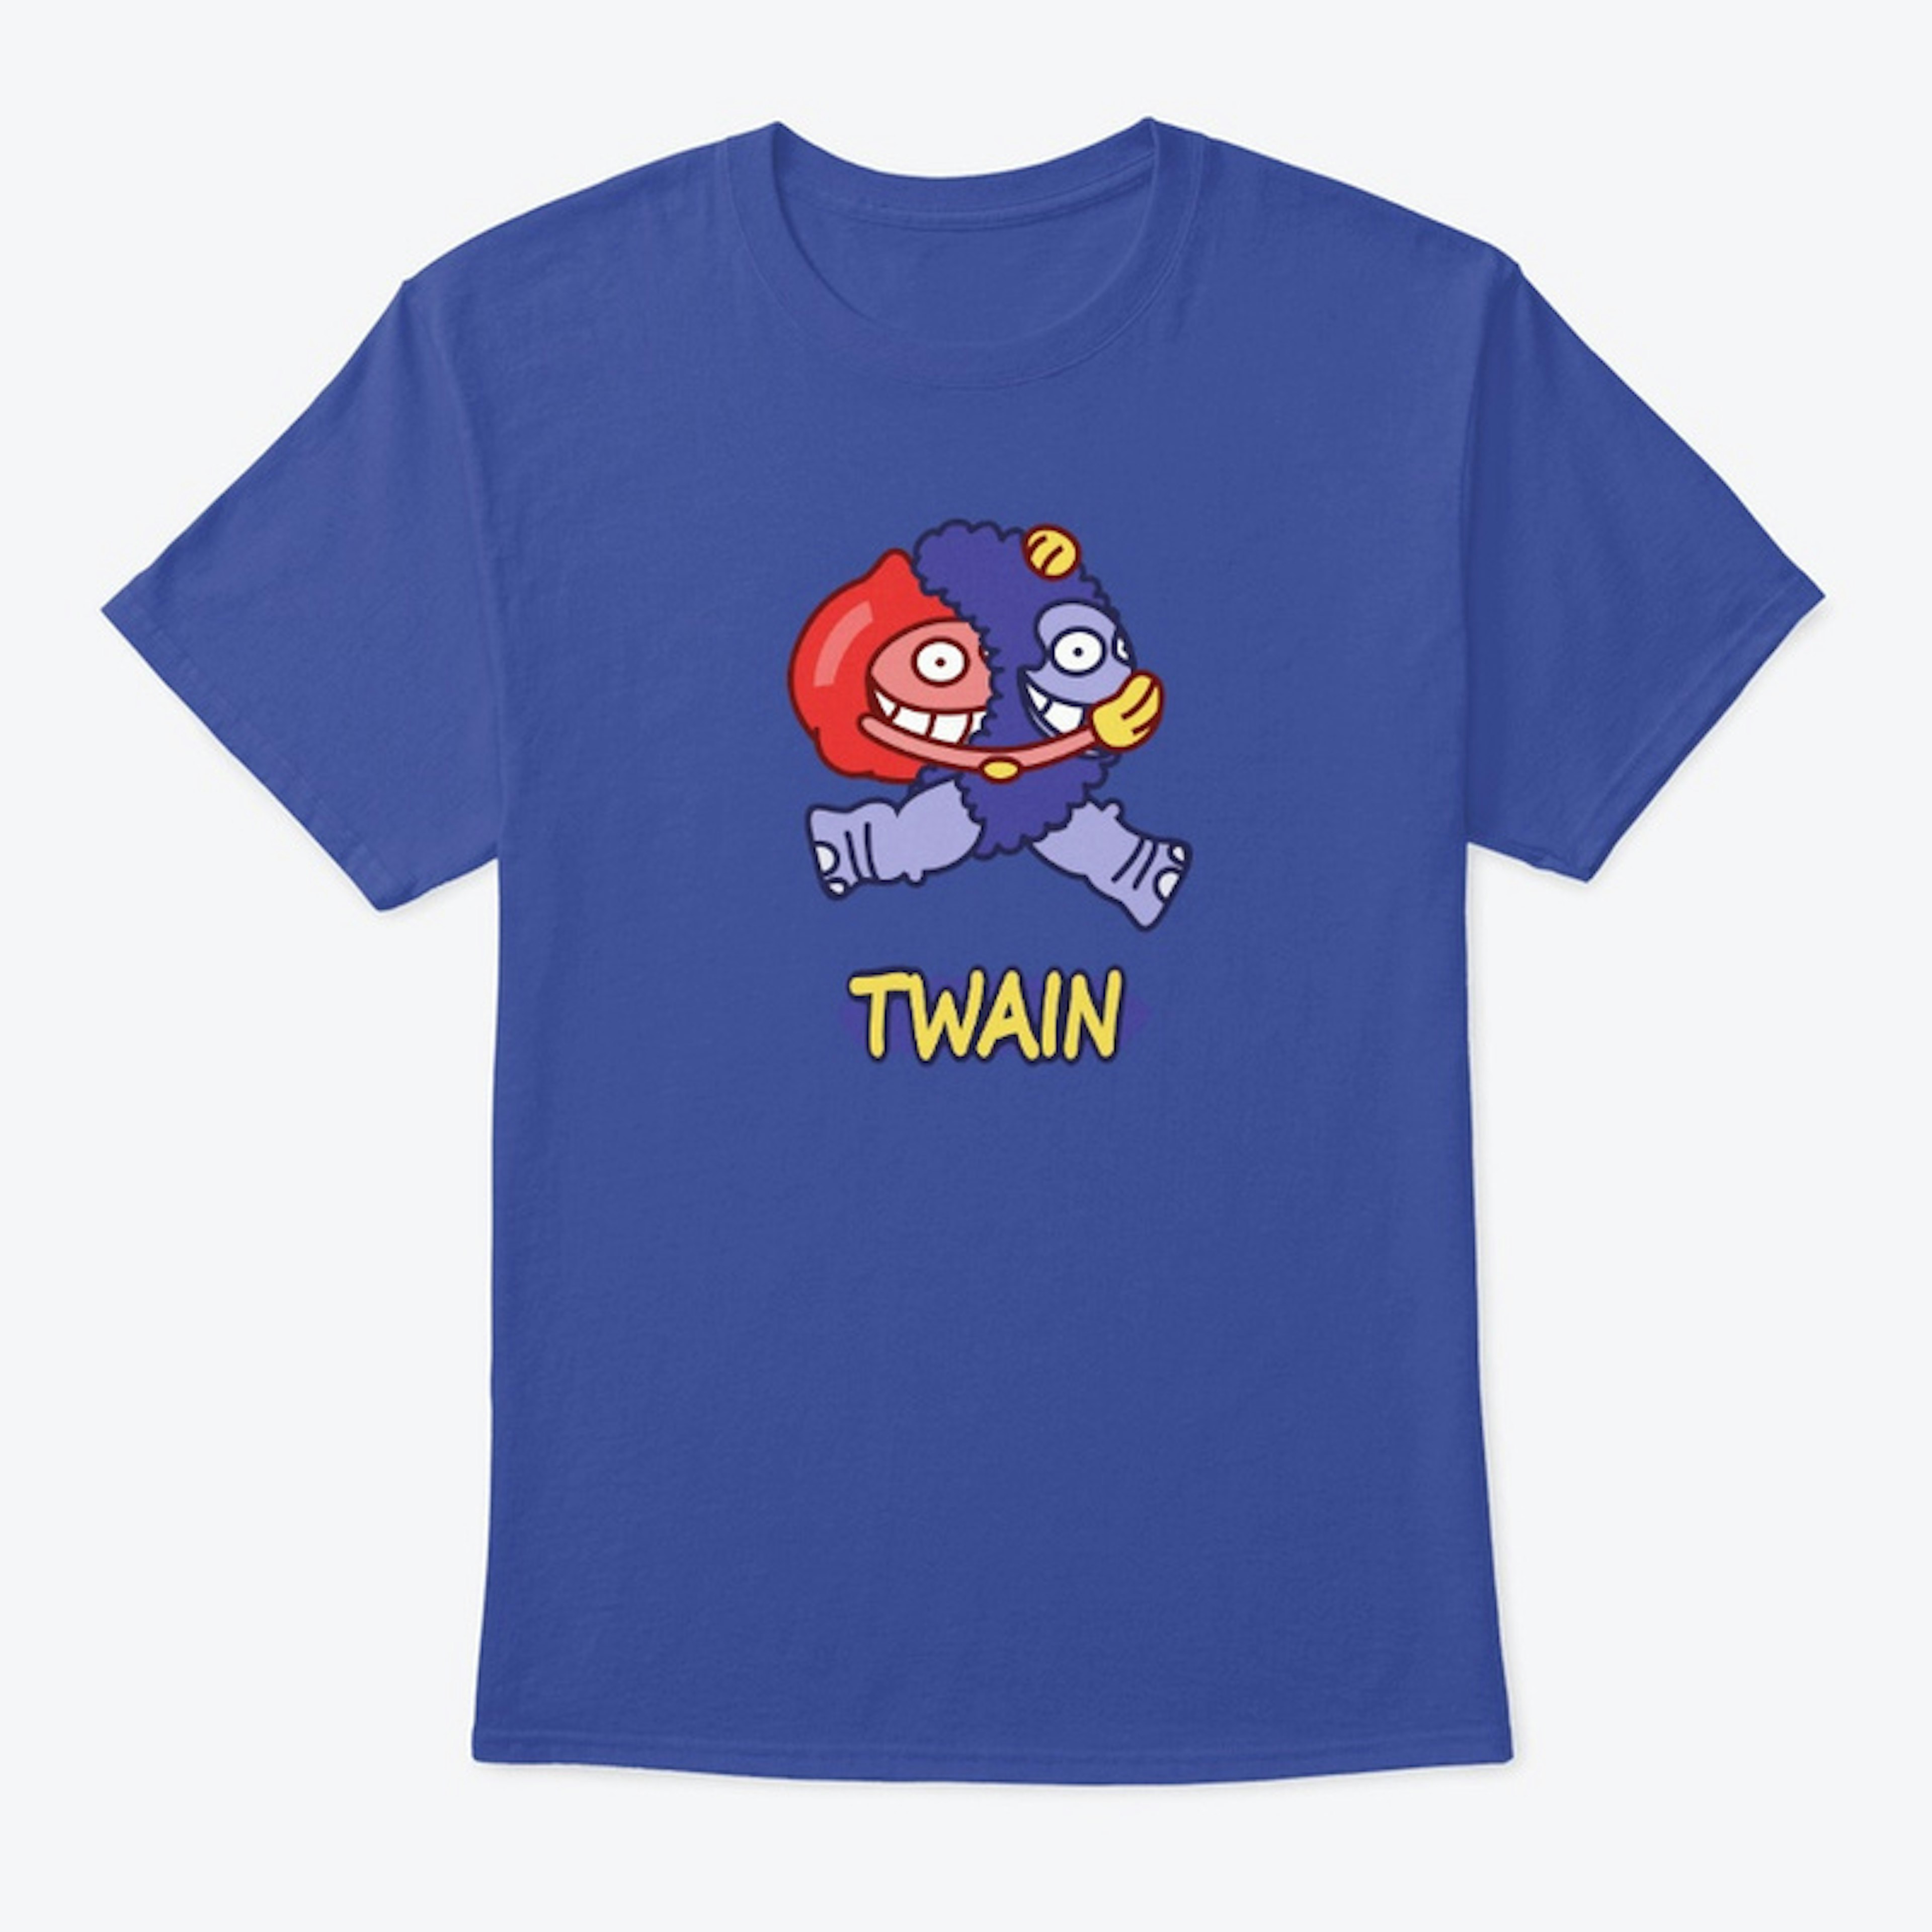 Twain shirt